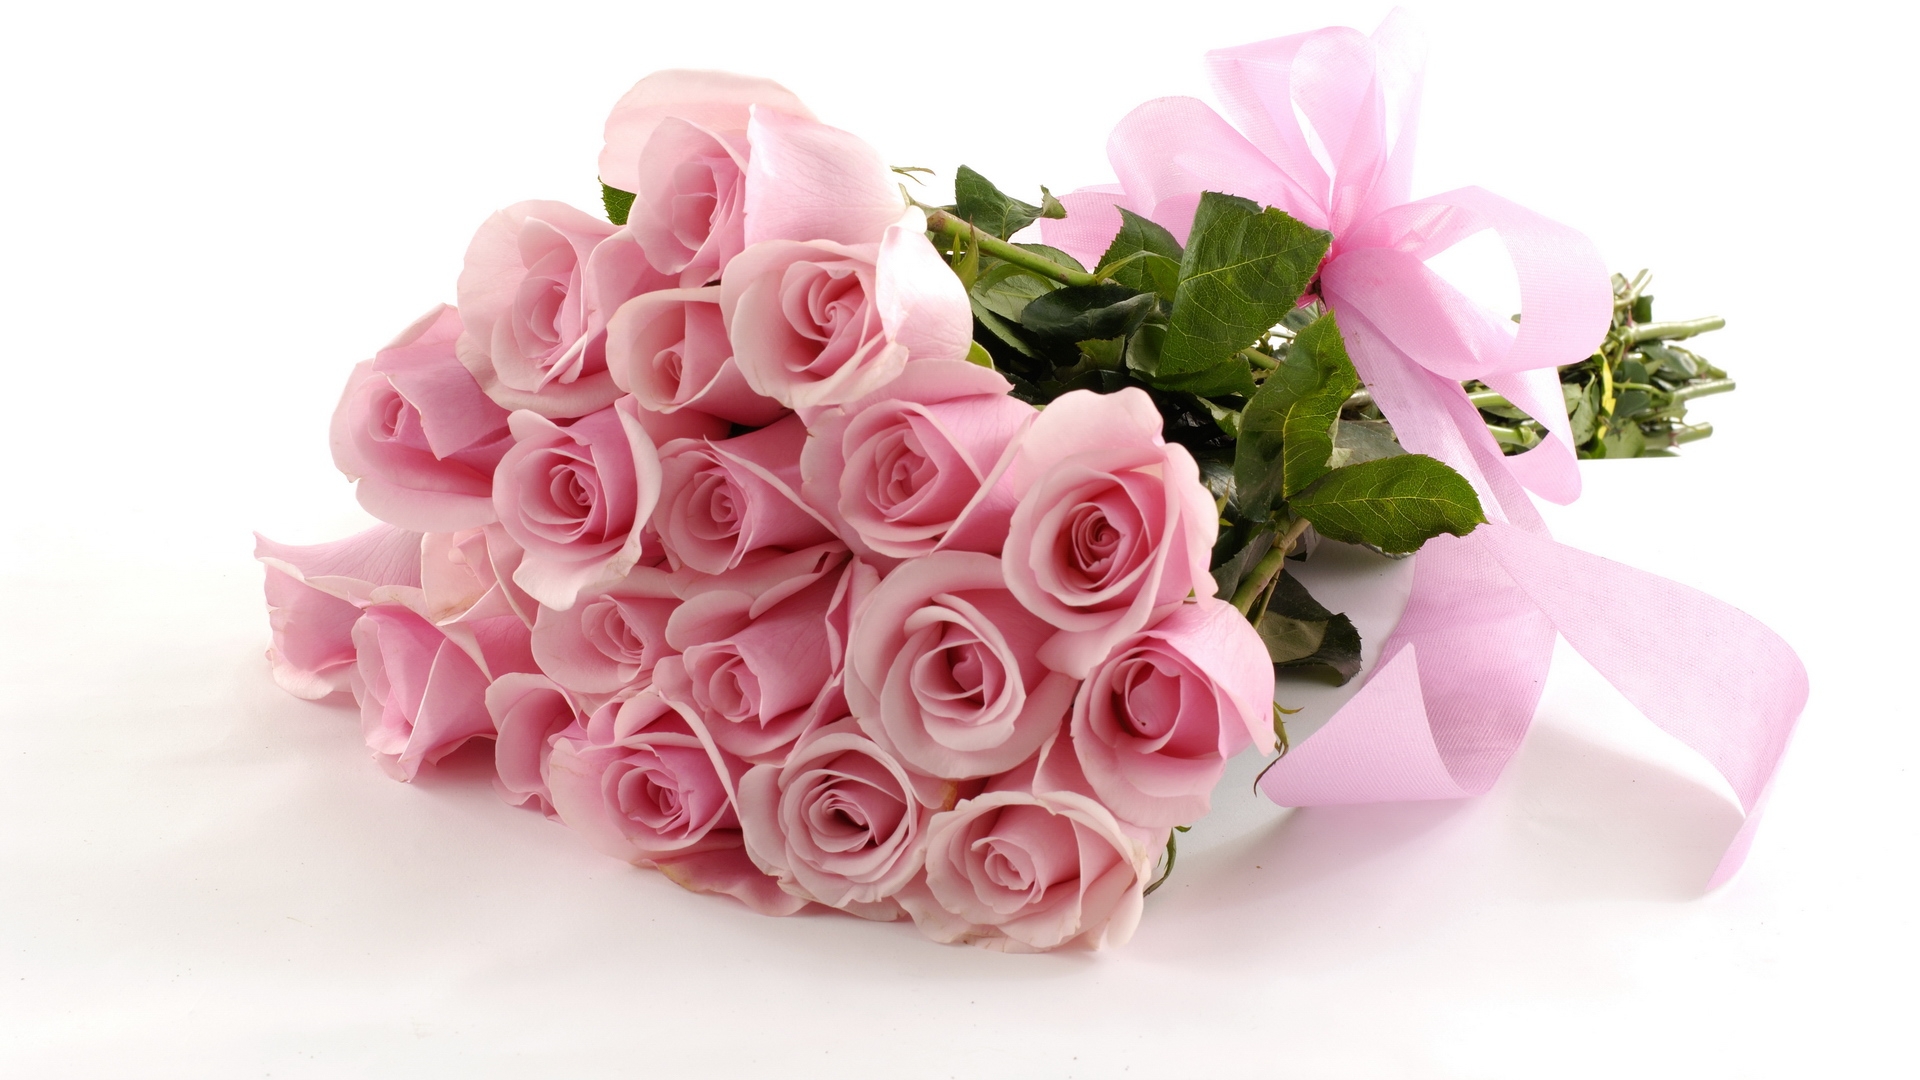 Саяногорск Инфо - holidays___international_womens_day_beautiful_pink_bouquet_as_a_gift_on_march_8_057093_.jpg, Скачано: 1078